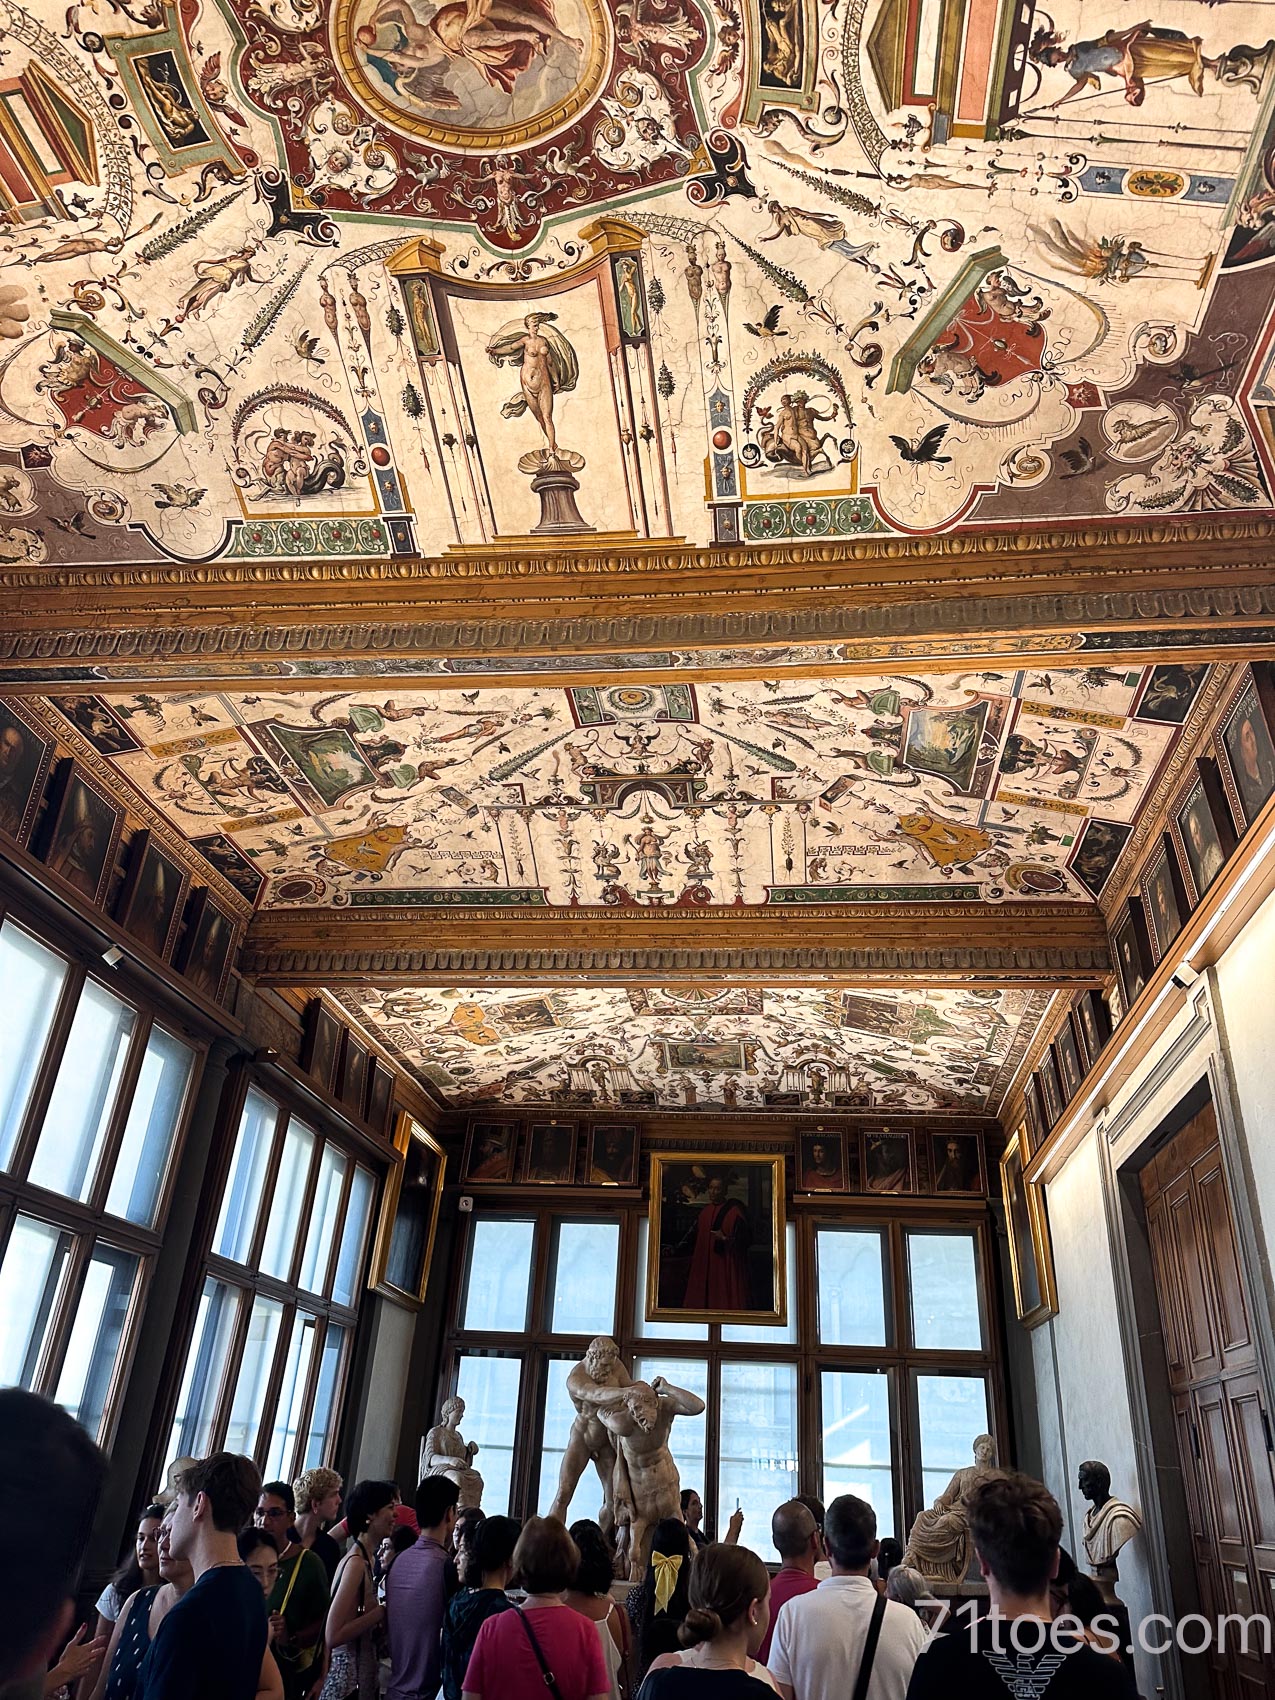 Exploring art at the Uffizi Gallery